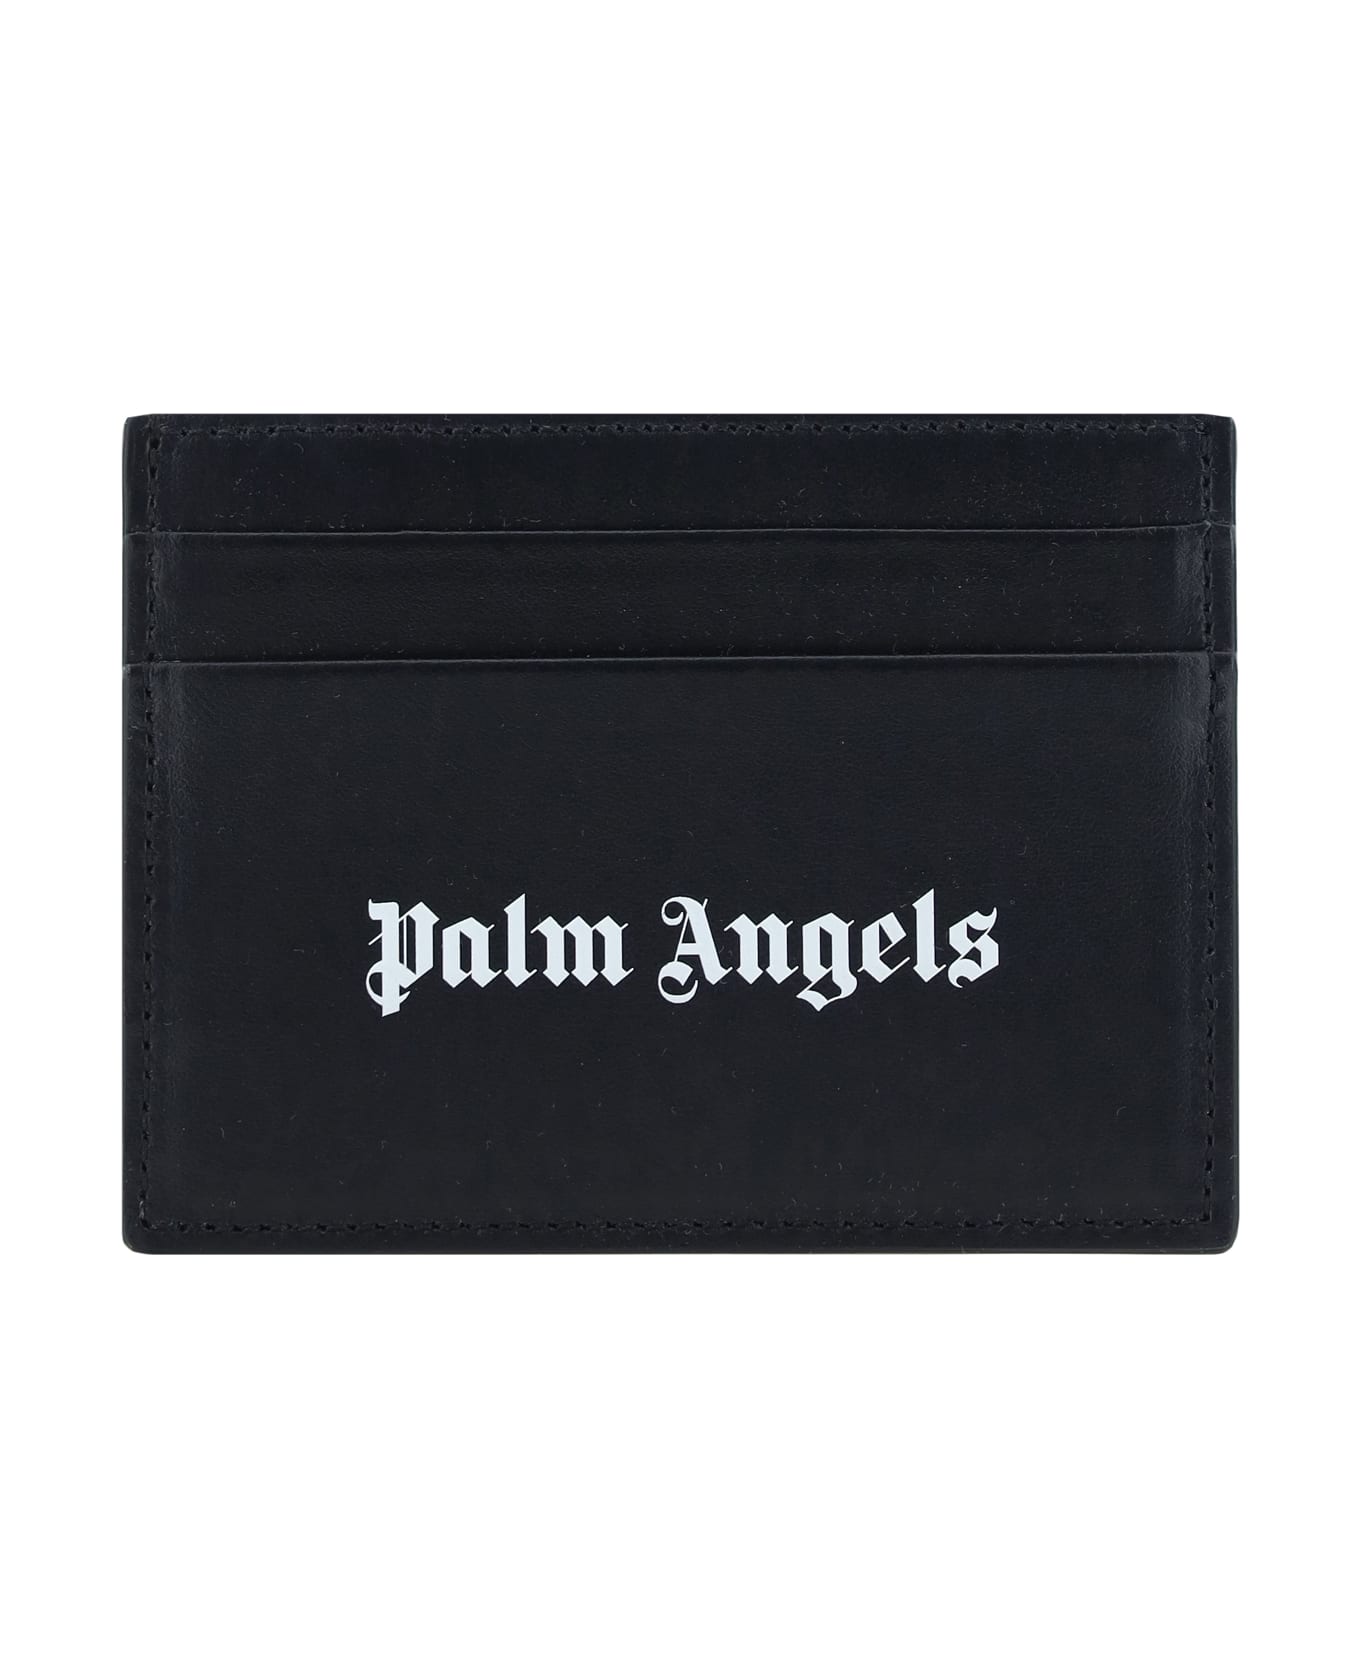 Palm Angels Black Calf Leather Card Holder - Black Opti 財布